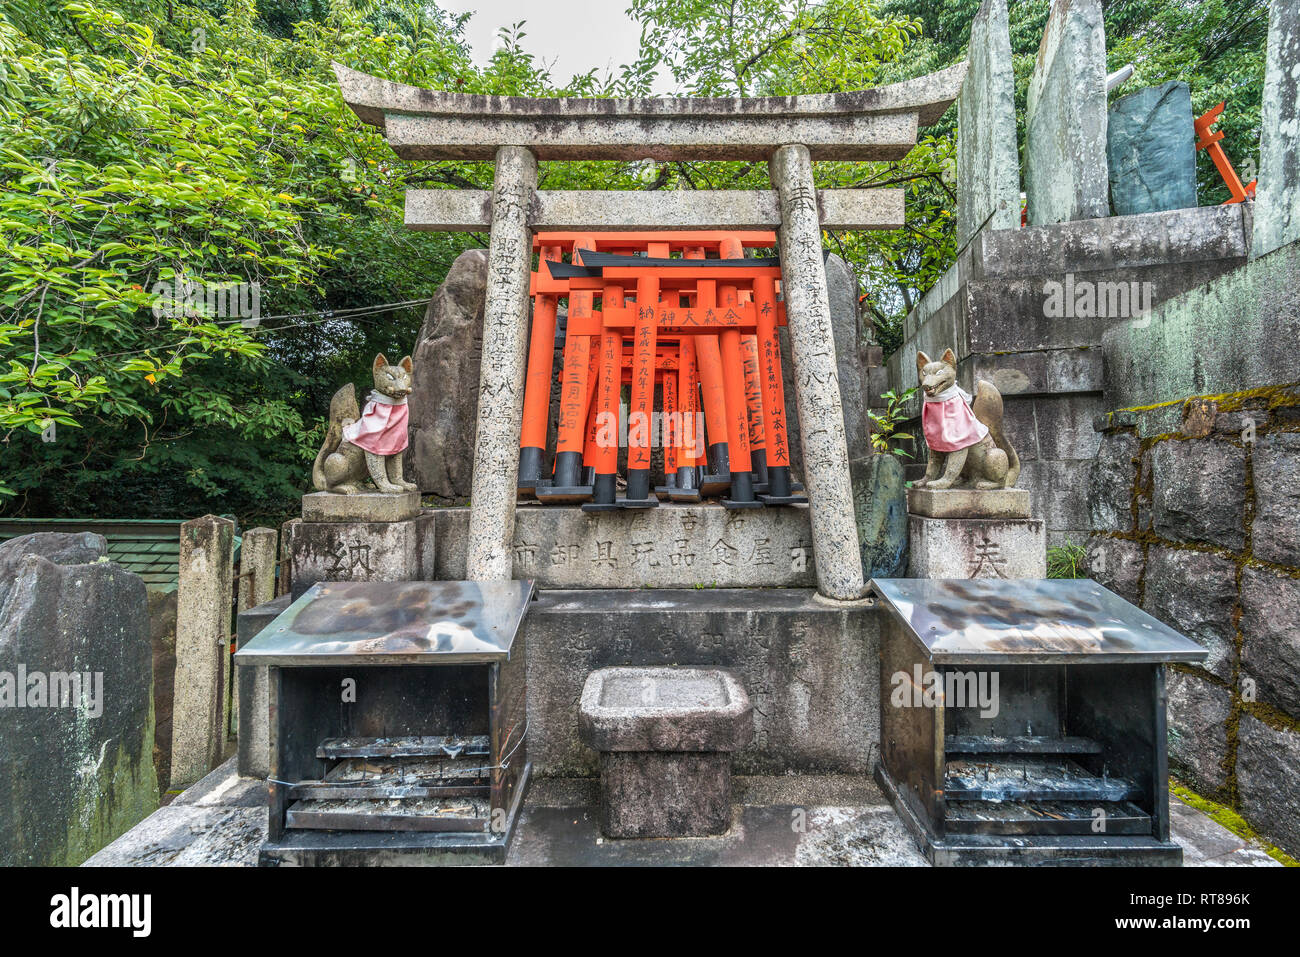 Fushimi-ku, Kyoto, Japan - August 23, 2017 : Kanamori Otsuka (worshiping stones engraved with deities names) at Sannomine (Shimosha Shinseki) area of  Stock Photo